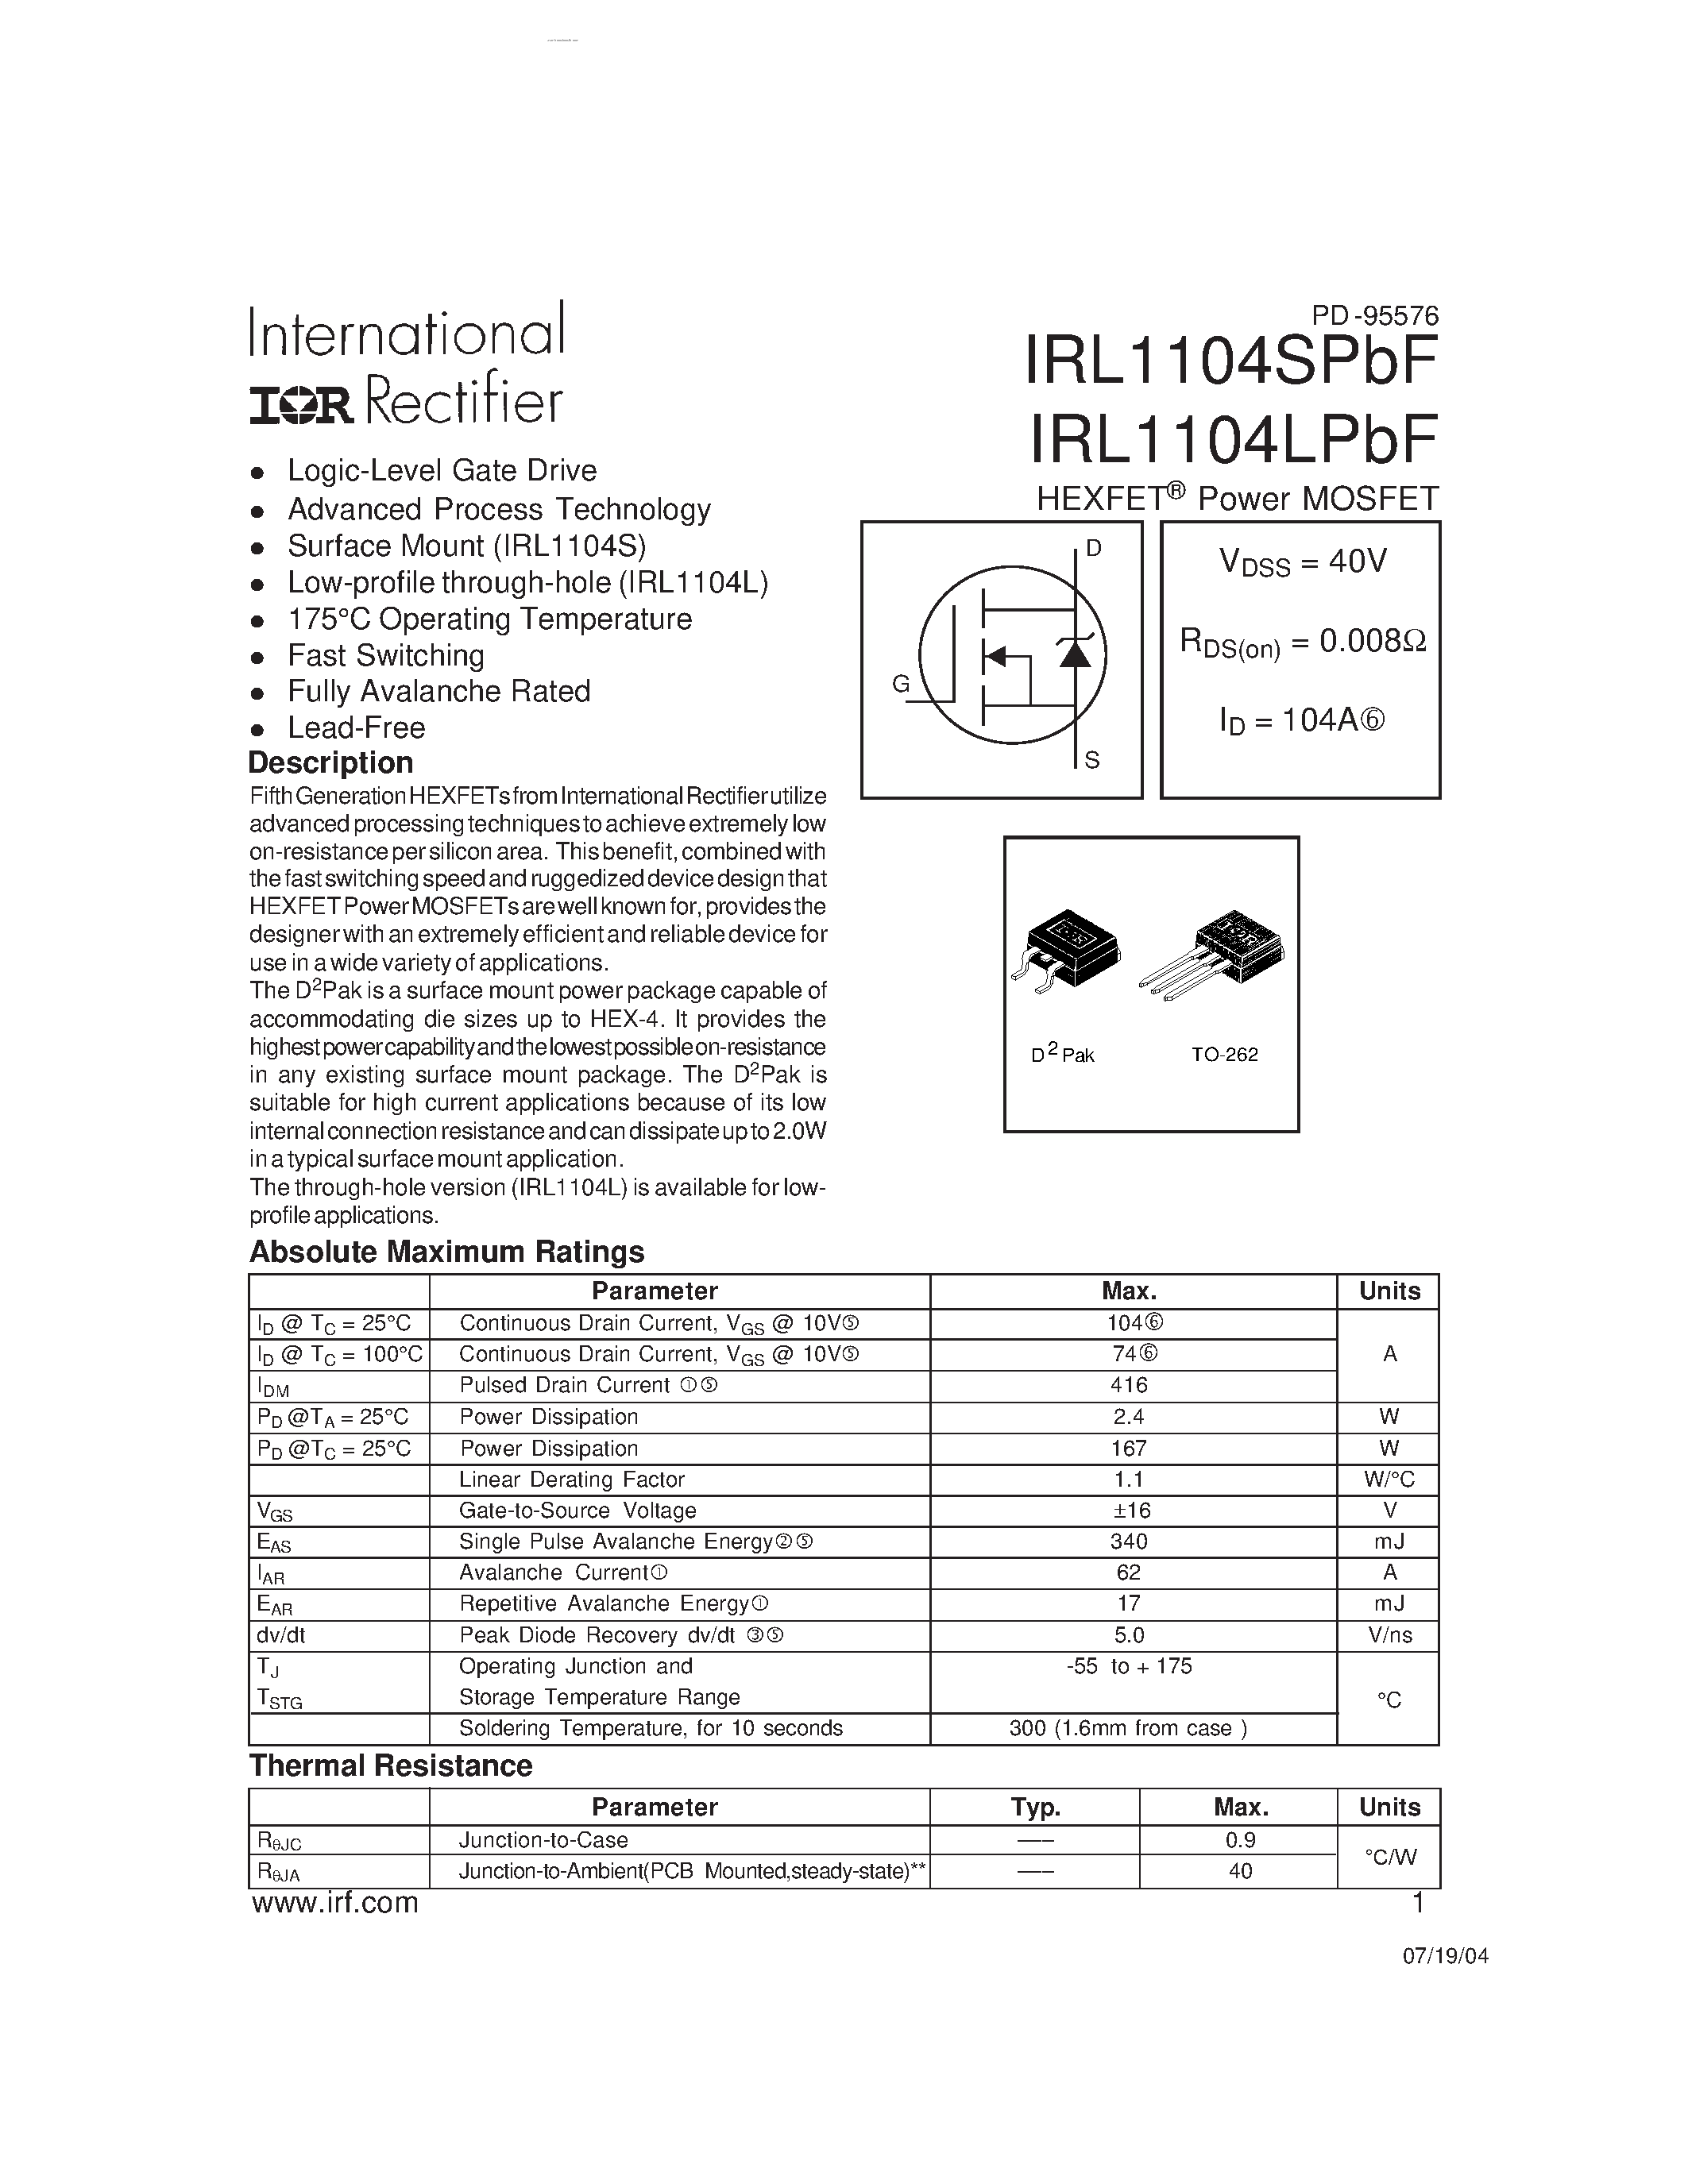 Даташит IRL1104LPBF-HEXFET Power MOSFET страница 1